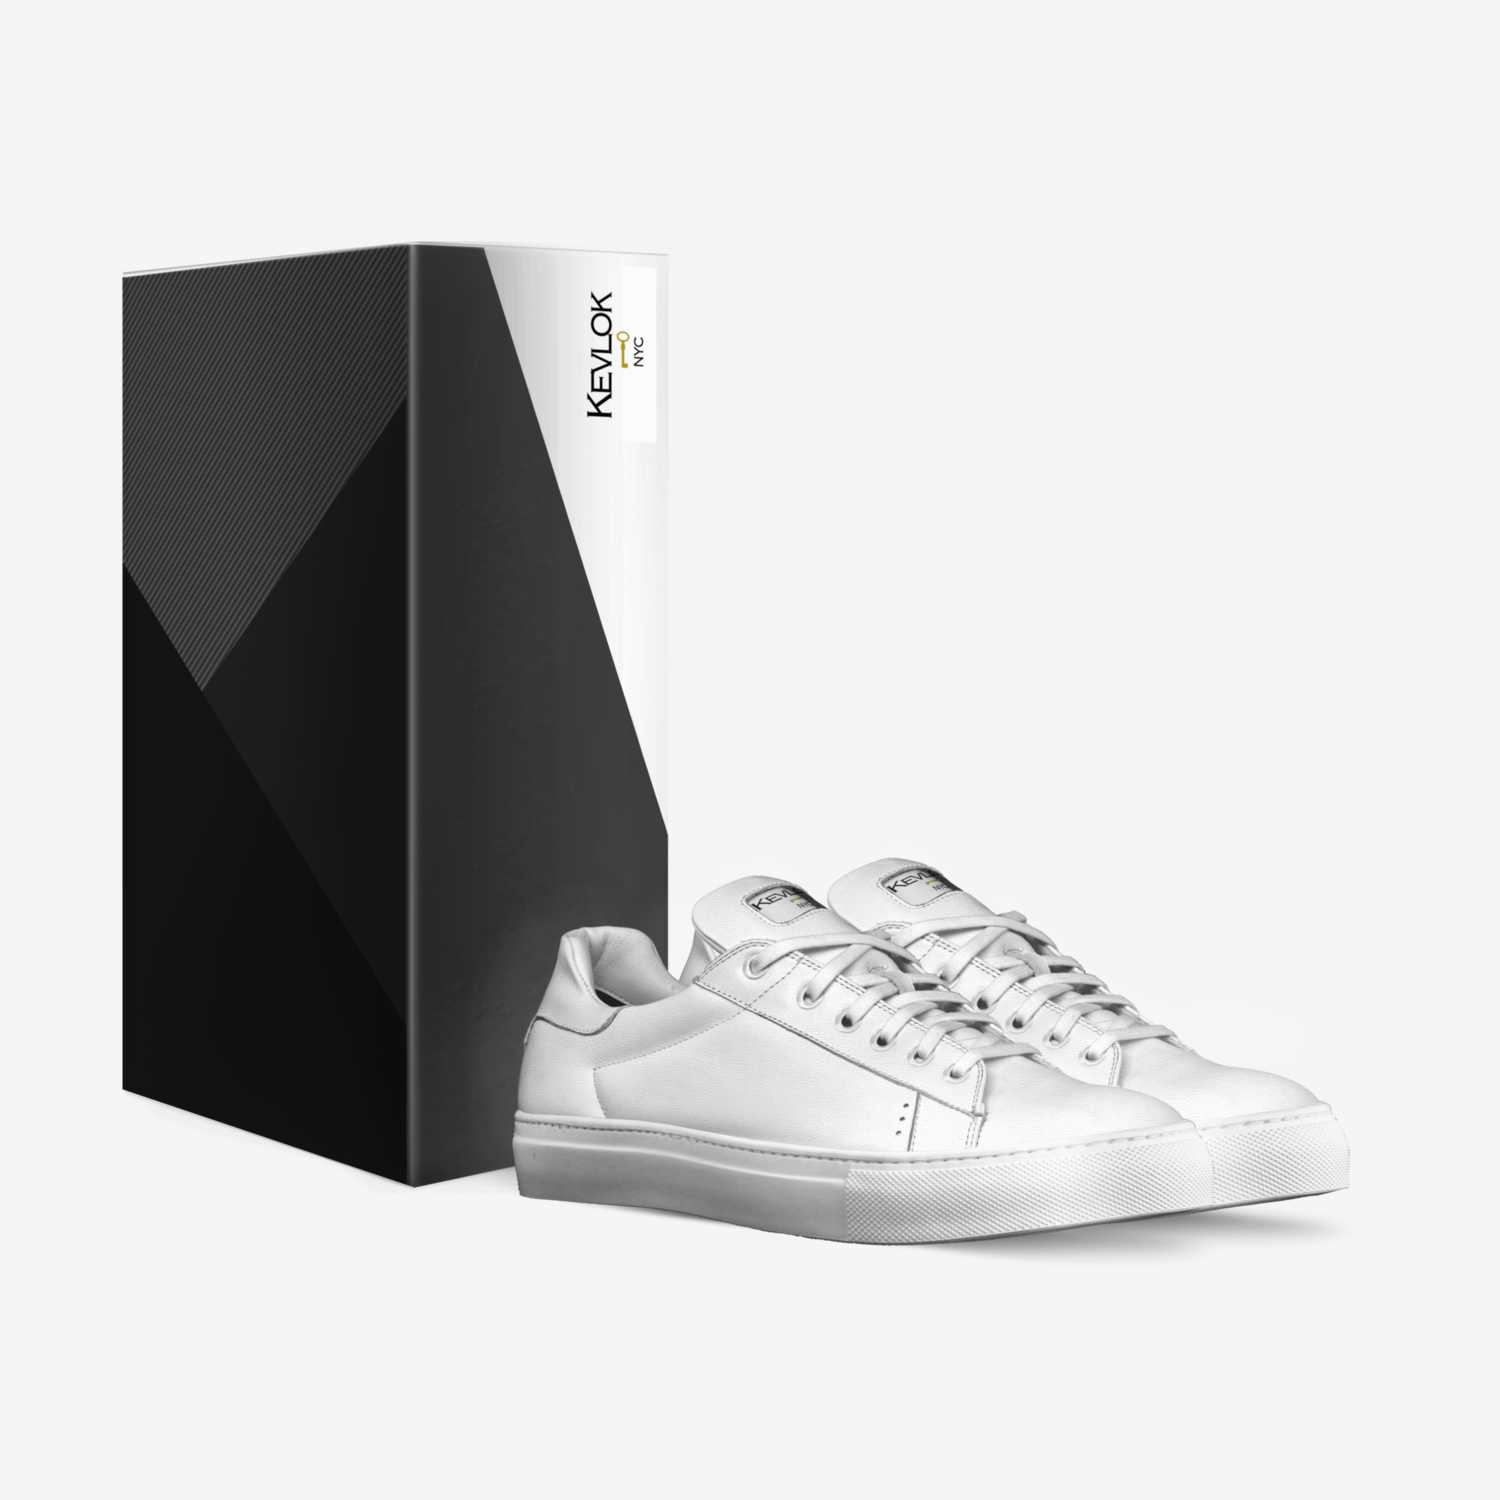 Kevlok NYC  custom made in Italy shoes by Nicholas Kolvek | Box view